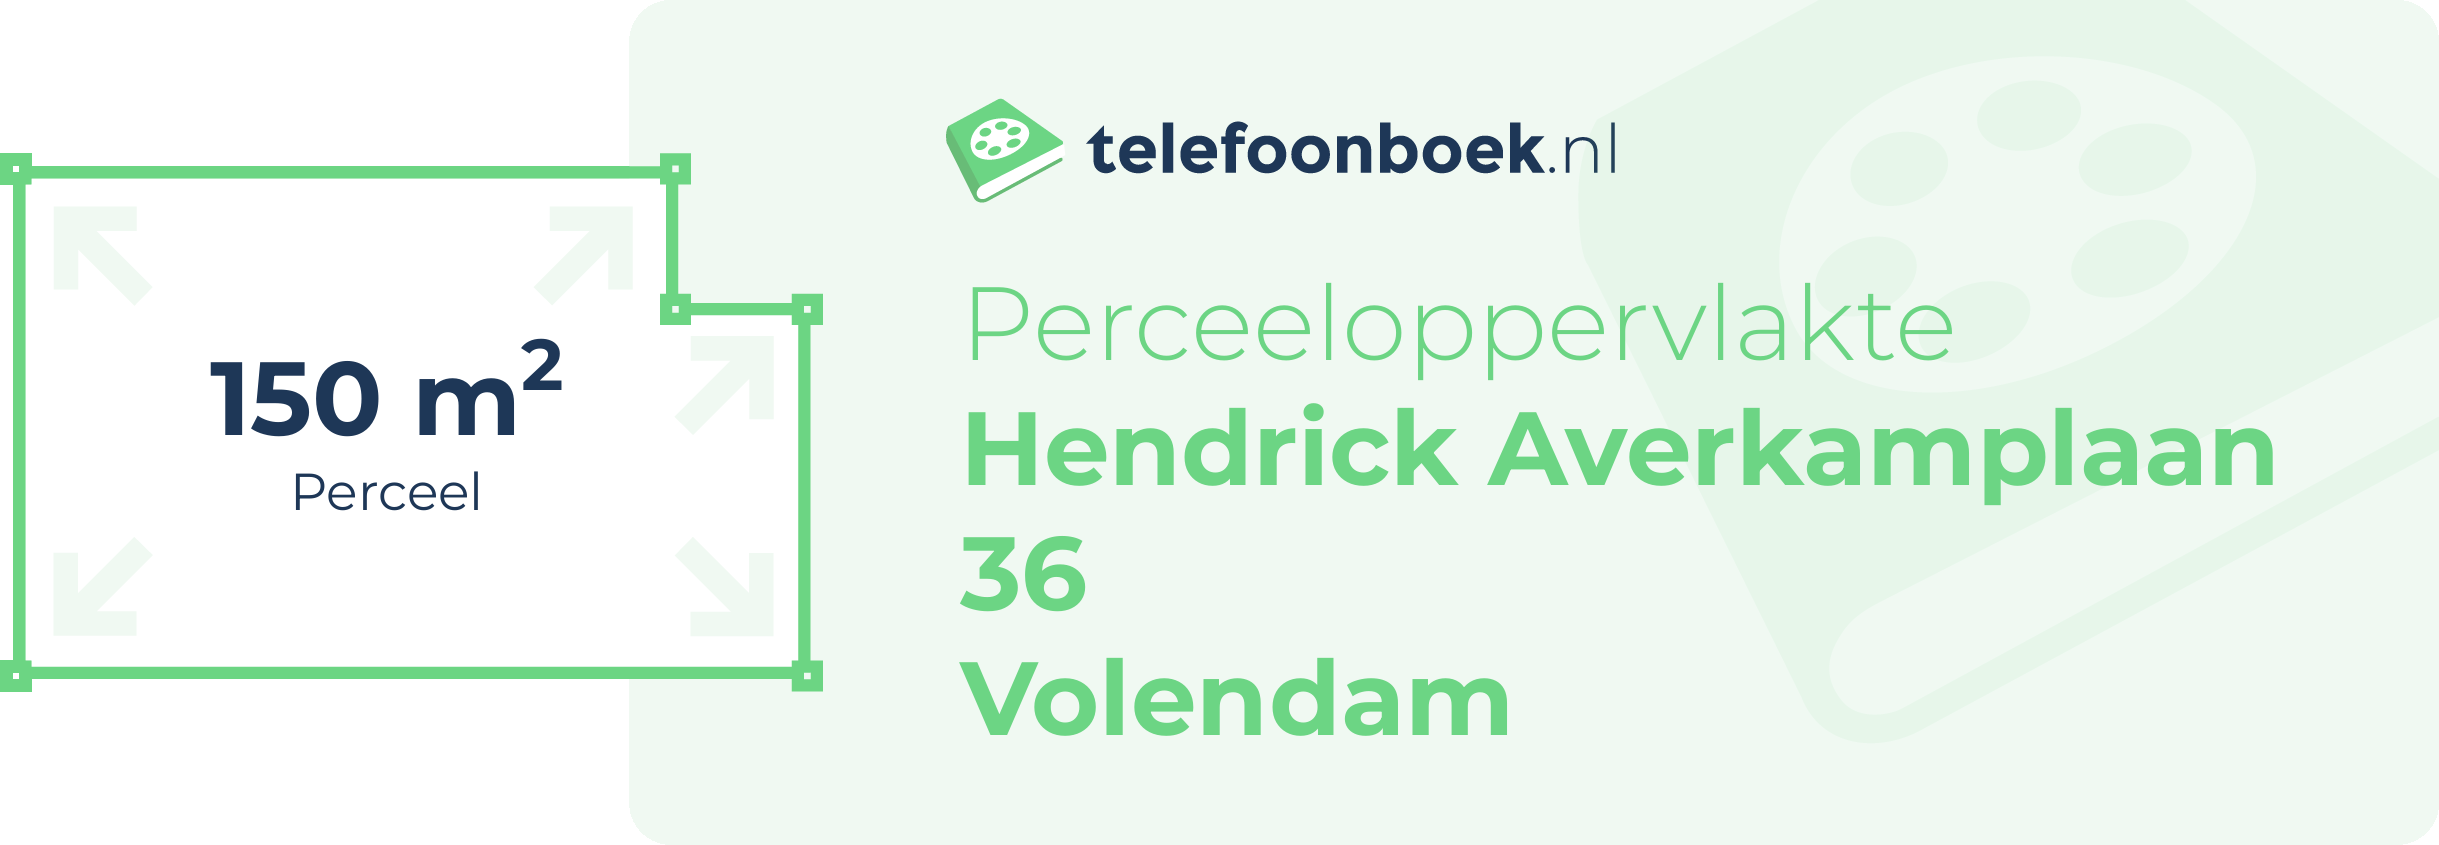 Perceeloppervlakte Hendrick Averkamplaan 36 Volendam